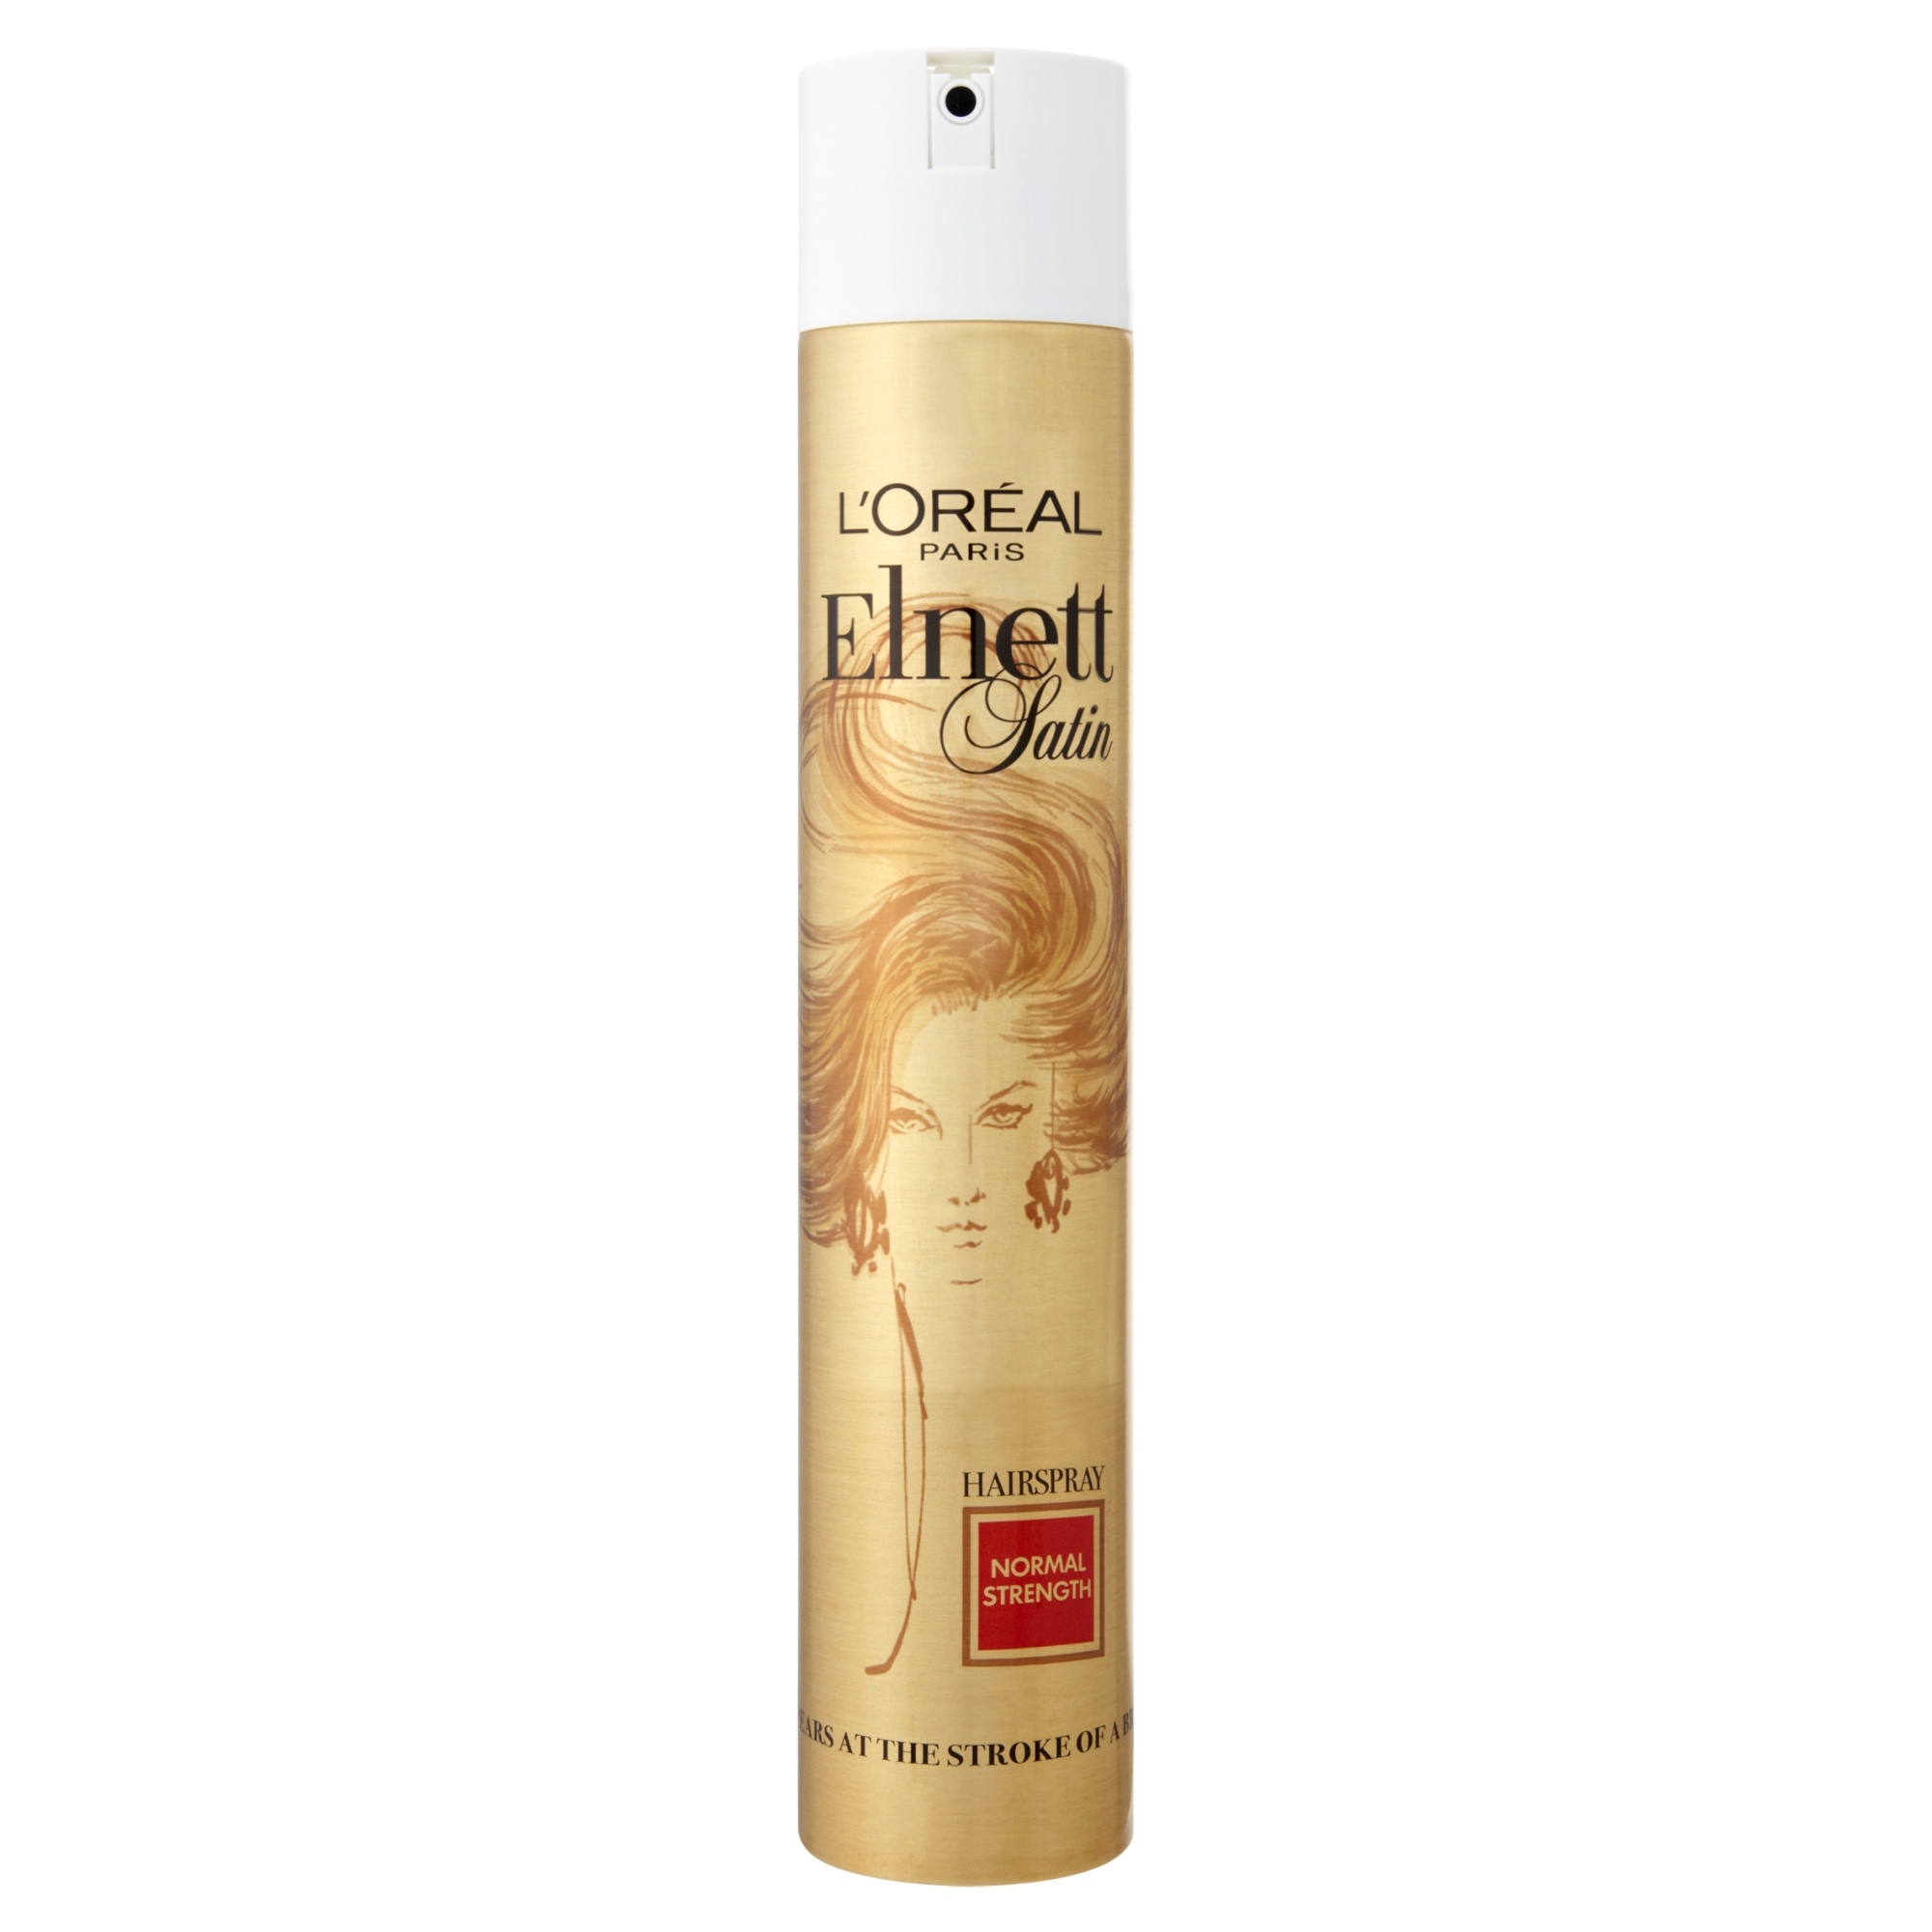 L'Oreal Paris Elnett Normal Strength Hairspray